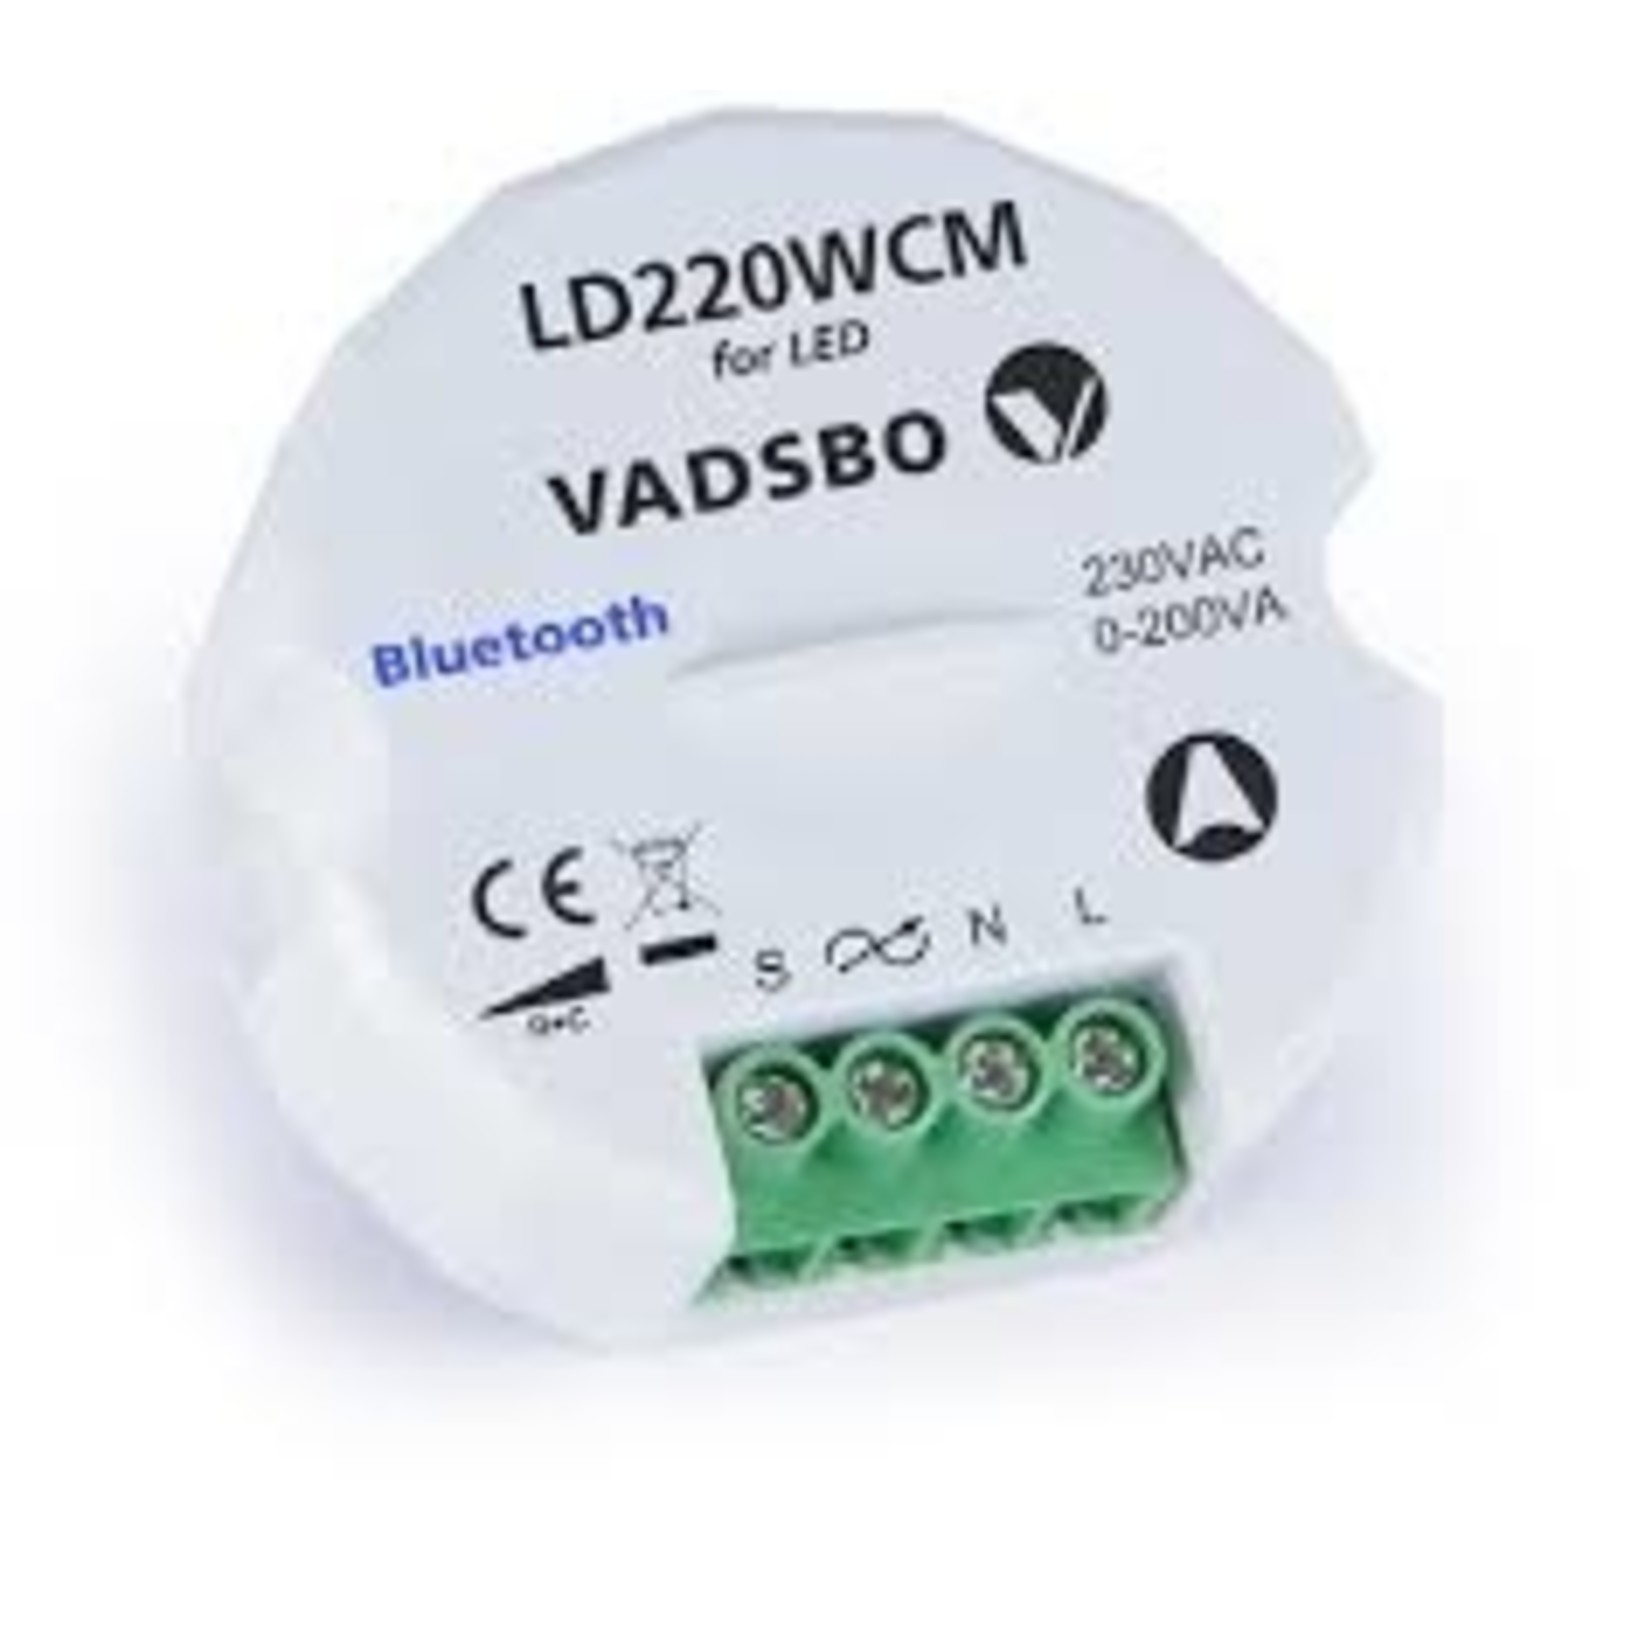 LD220WCM Bluetooth drukknop Module